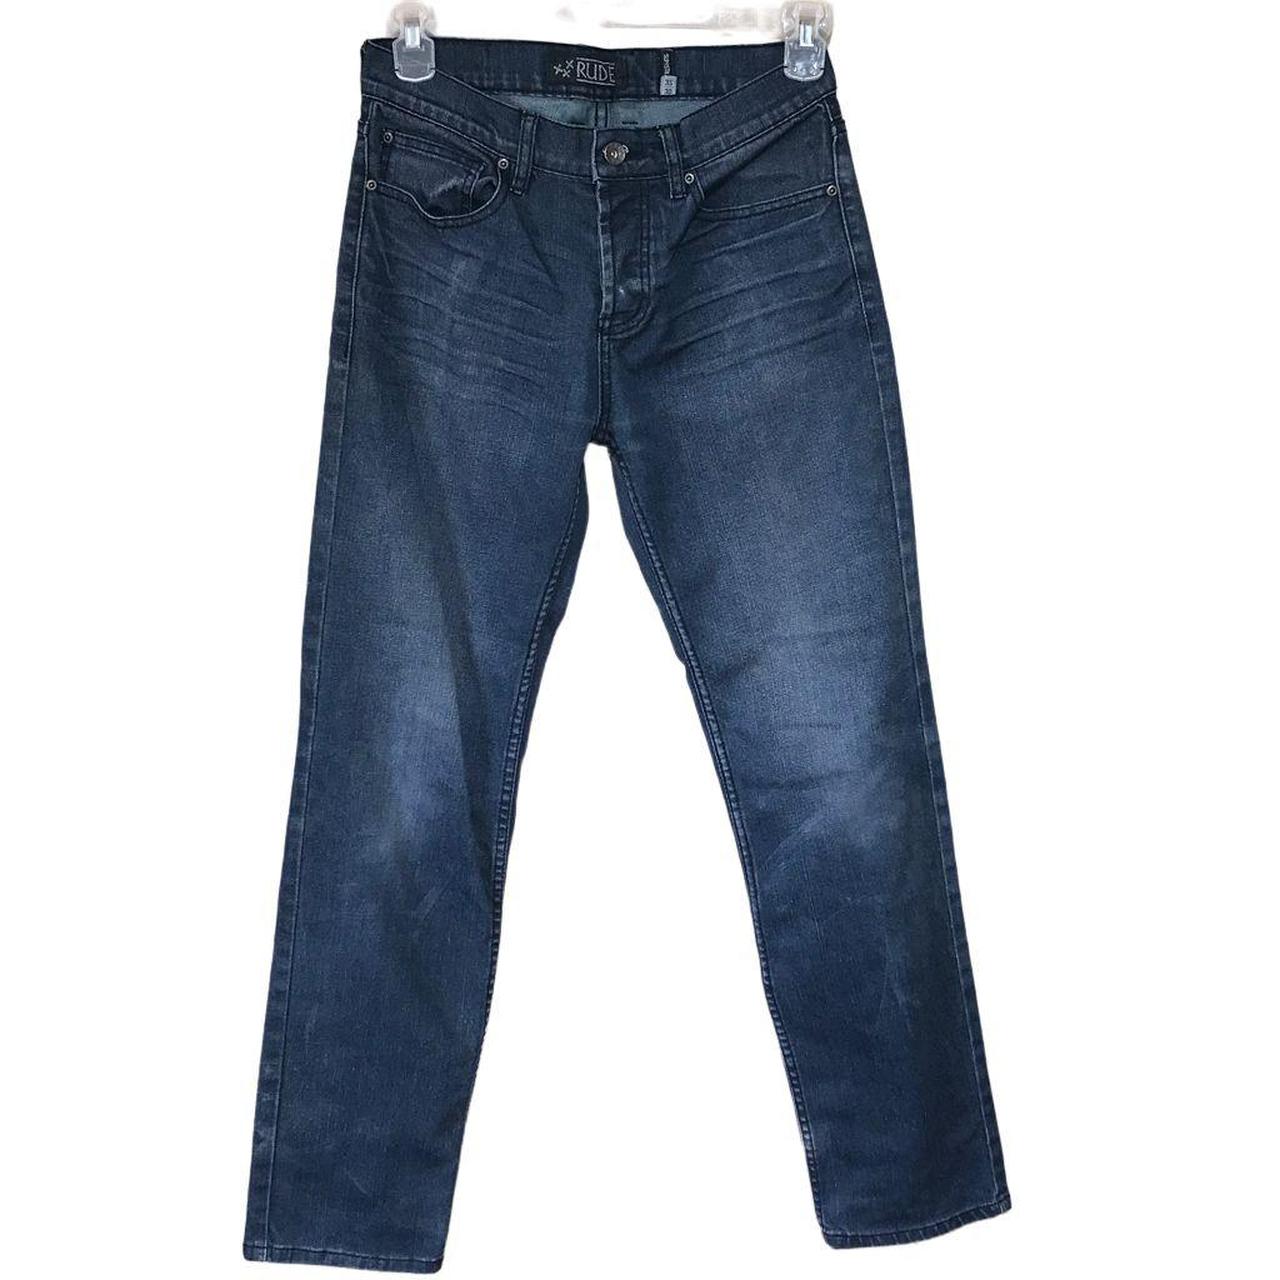 Product Image 2 - Rude XXX mens denim jeans